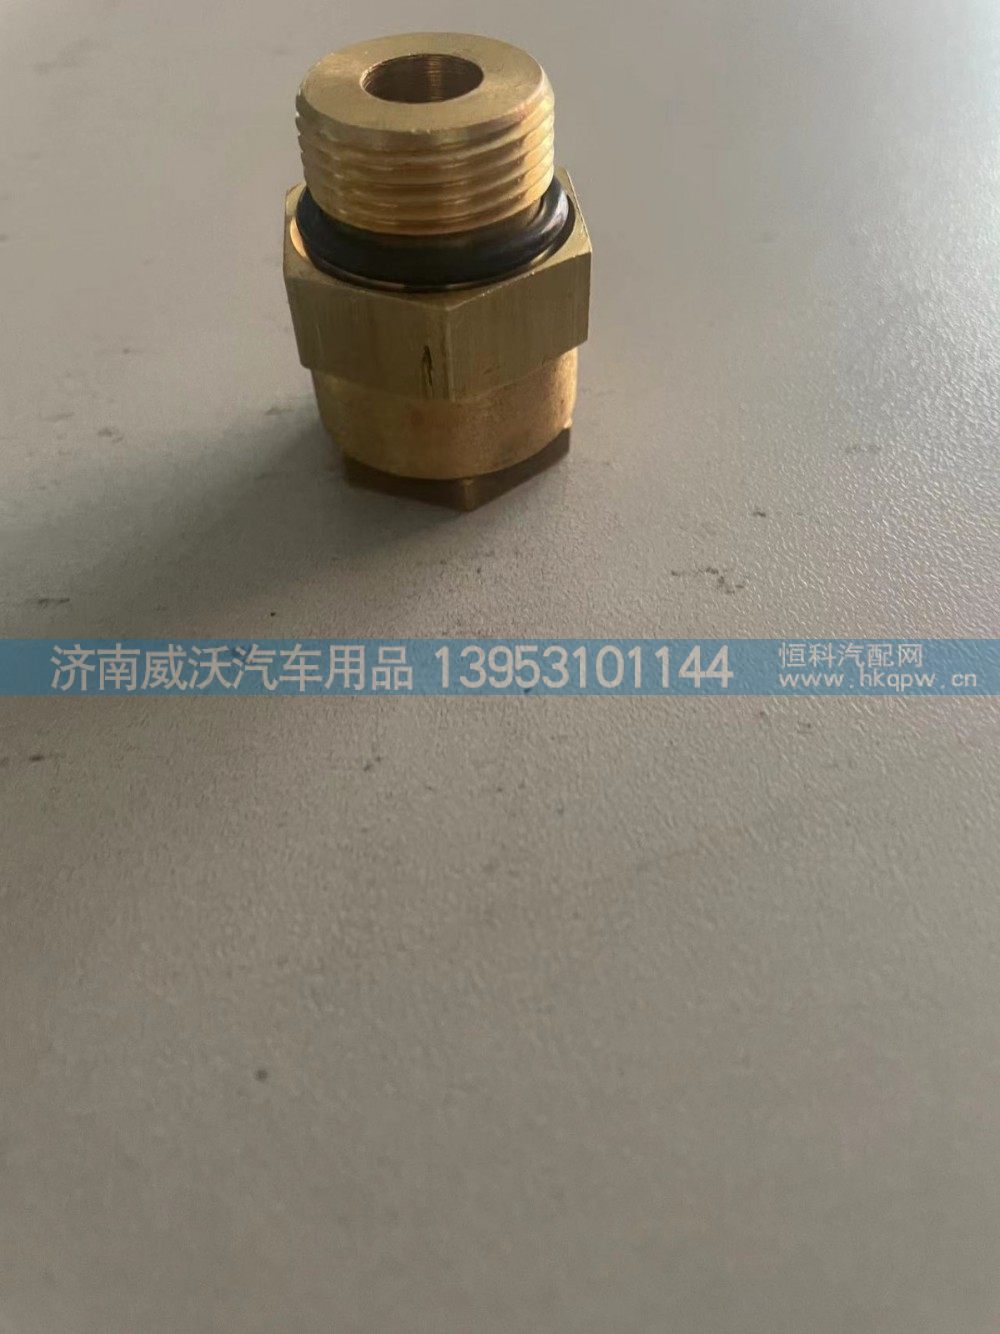 DZ97259366214,过渡接头体铜 NG12 M22*1.5,济南市威沃汽车用品有限公司